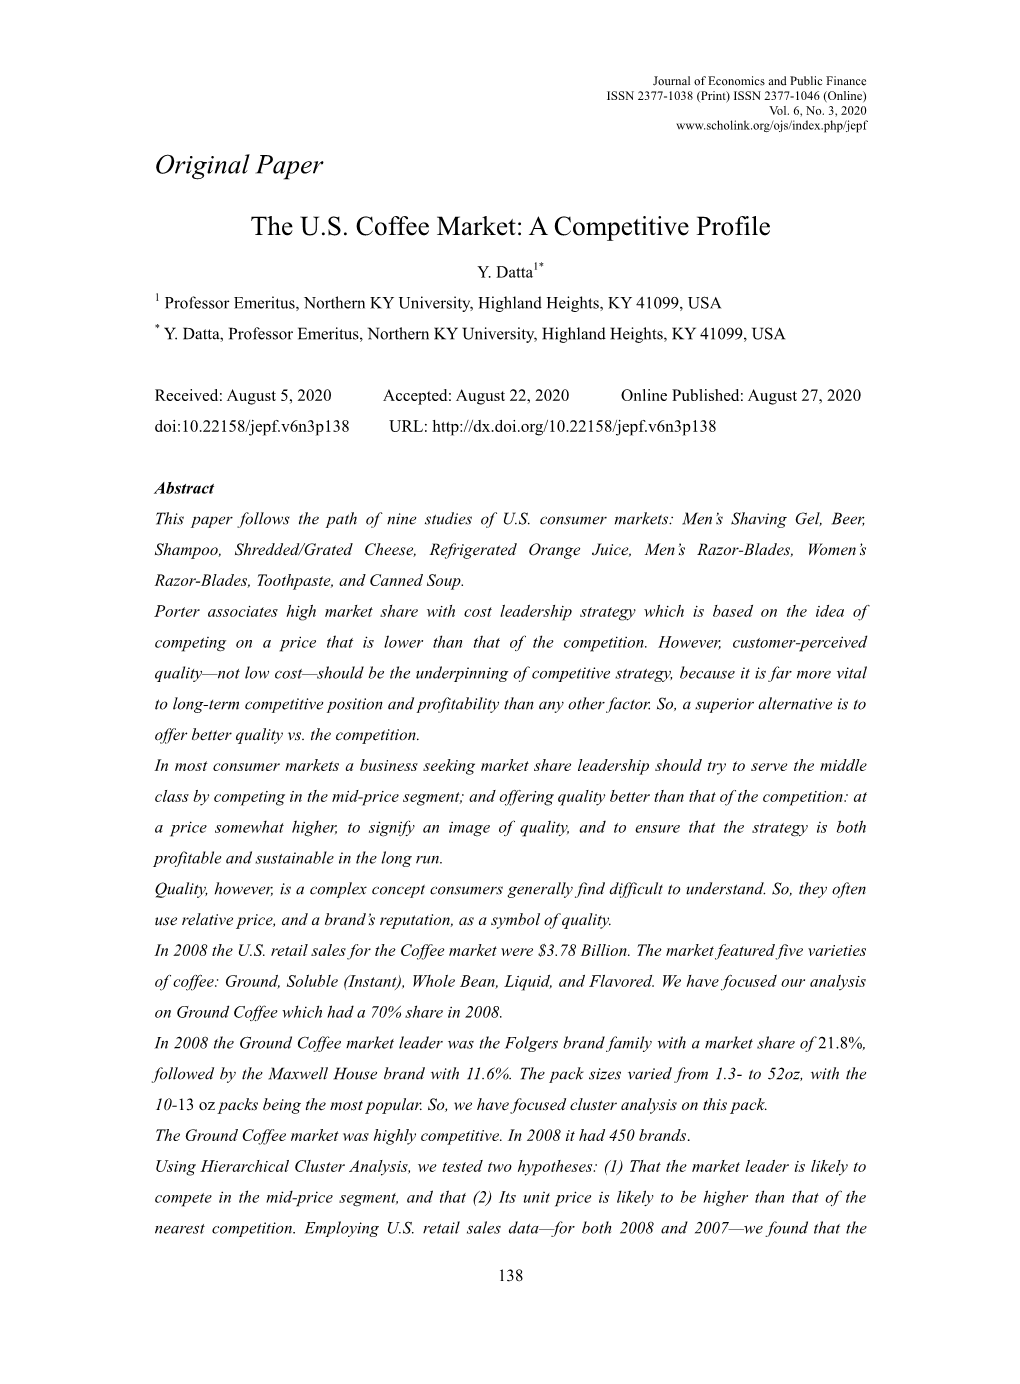 Original Paper the US Coffee Market